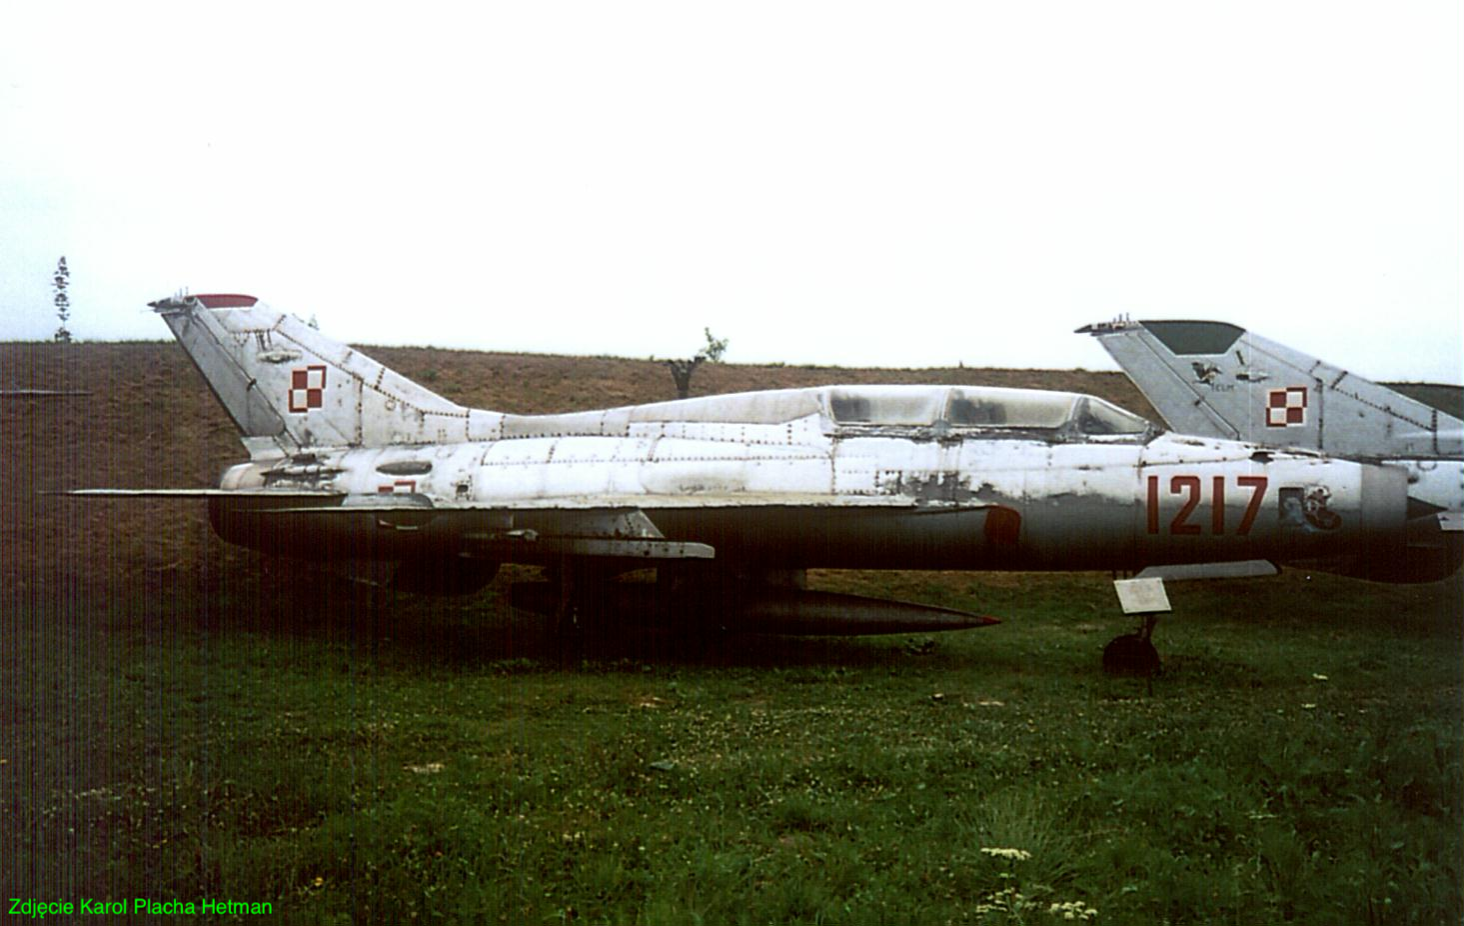 MiG-21 U nb 1217. 2002 rok. Zdjęcie Karol Placha Hetman